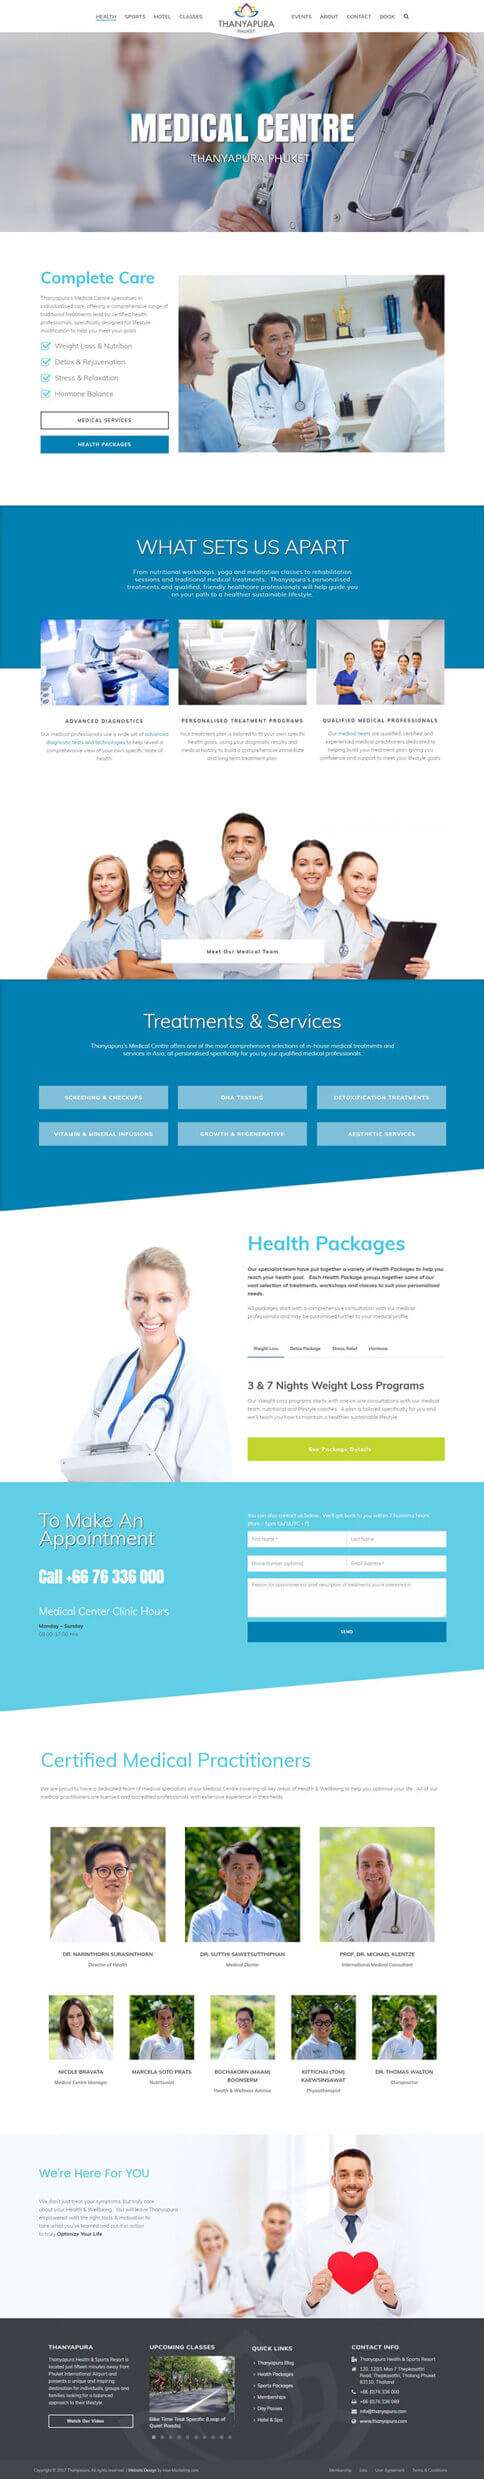 NEW Medical Center Page - Thanyapura Phuket Website Redesign